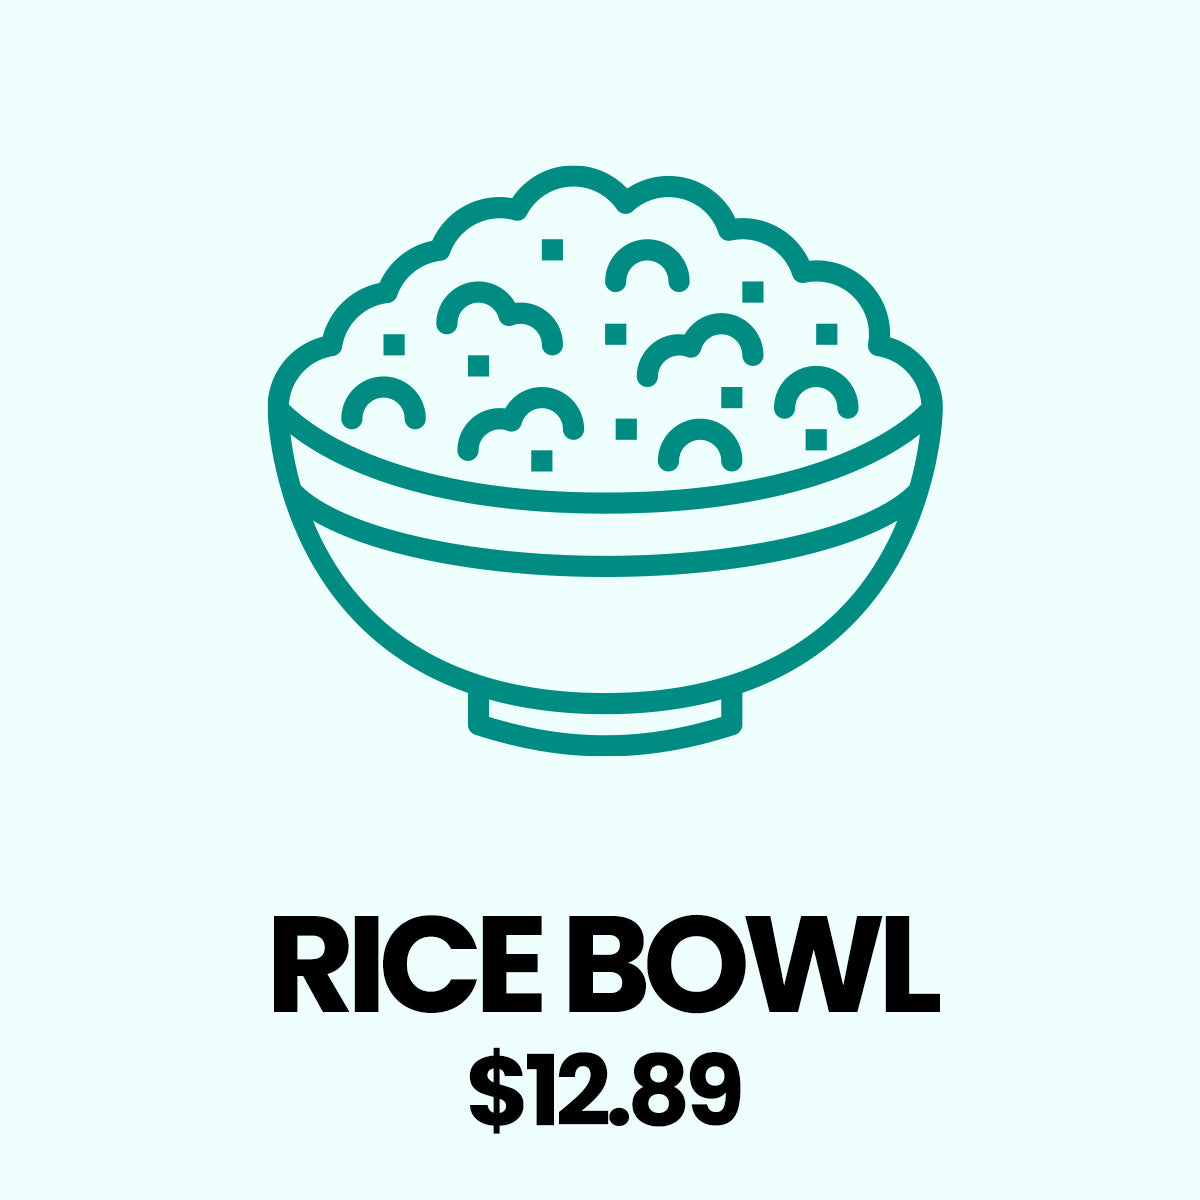 Construye tu propio plato de arroz - $12,89